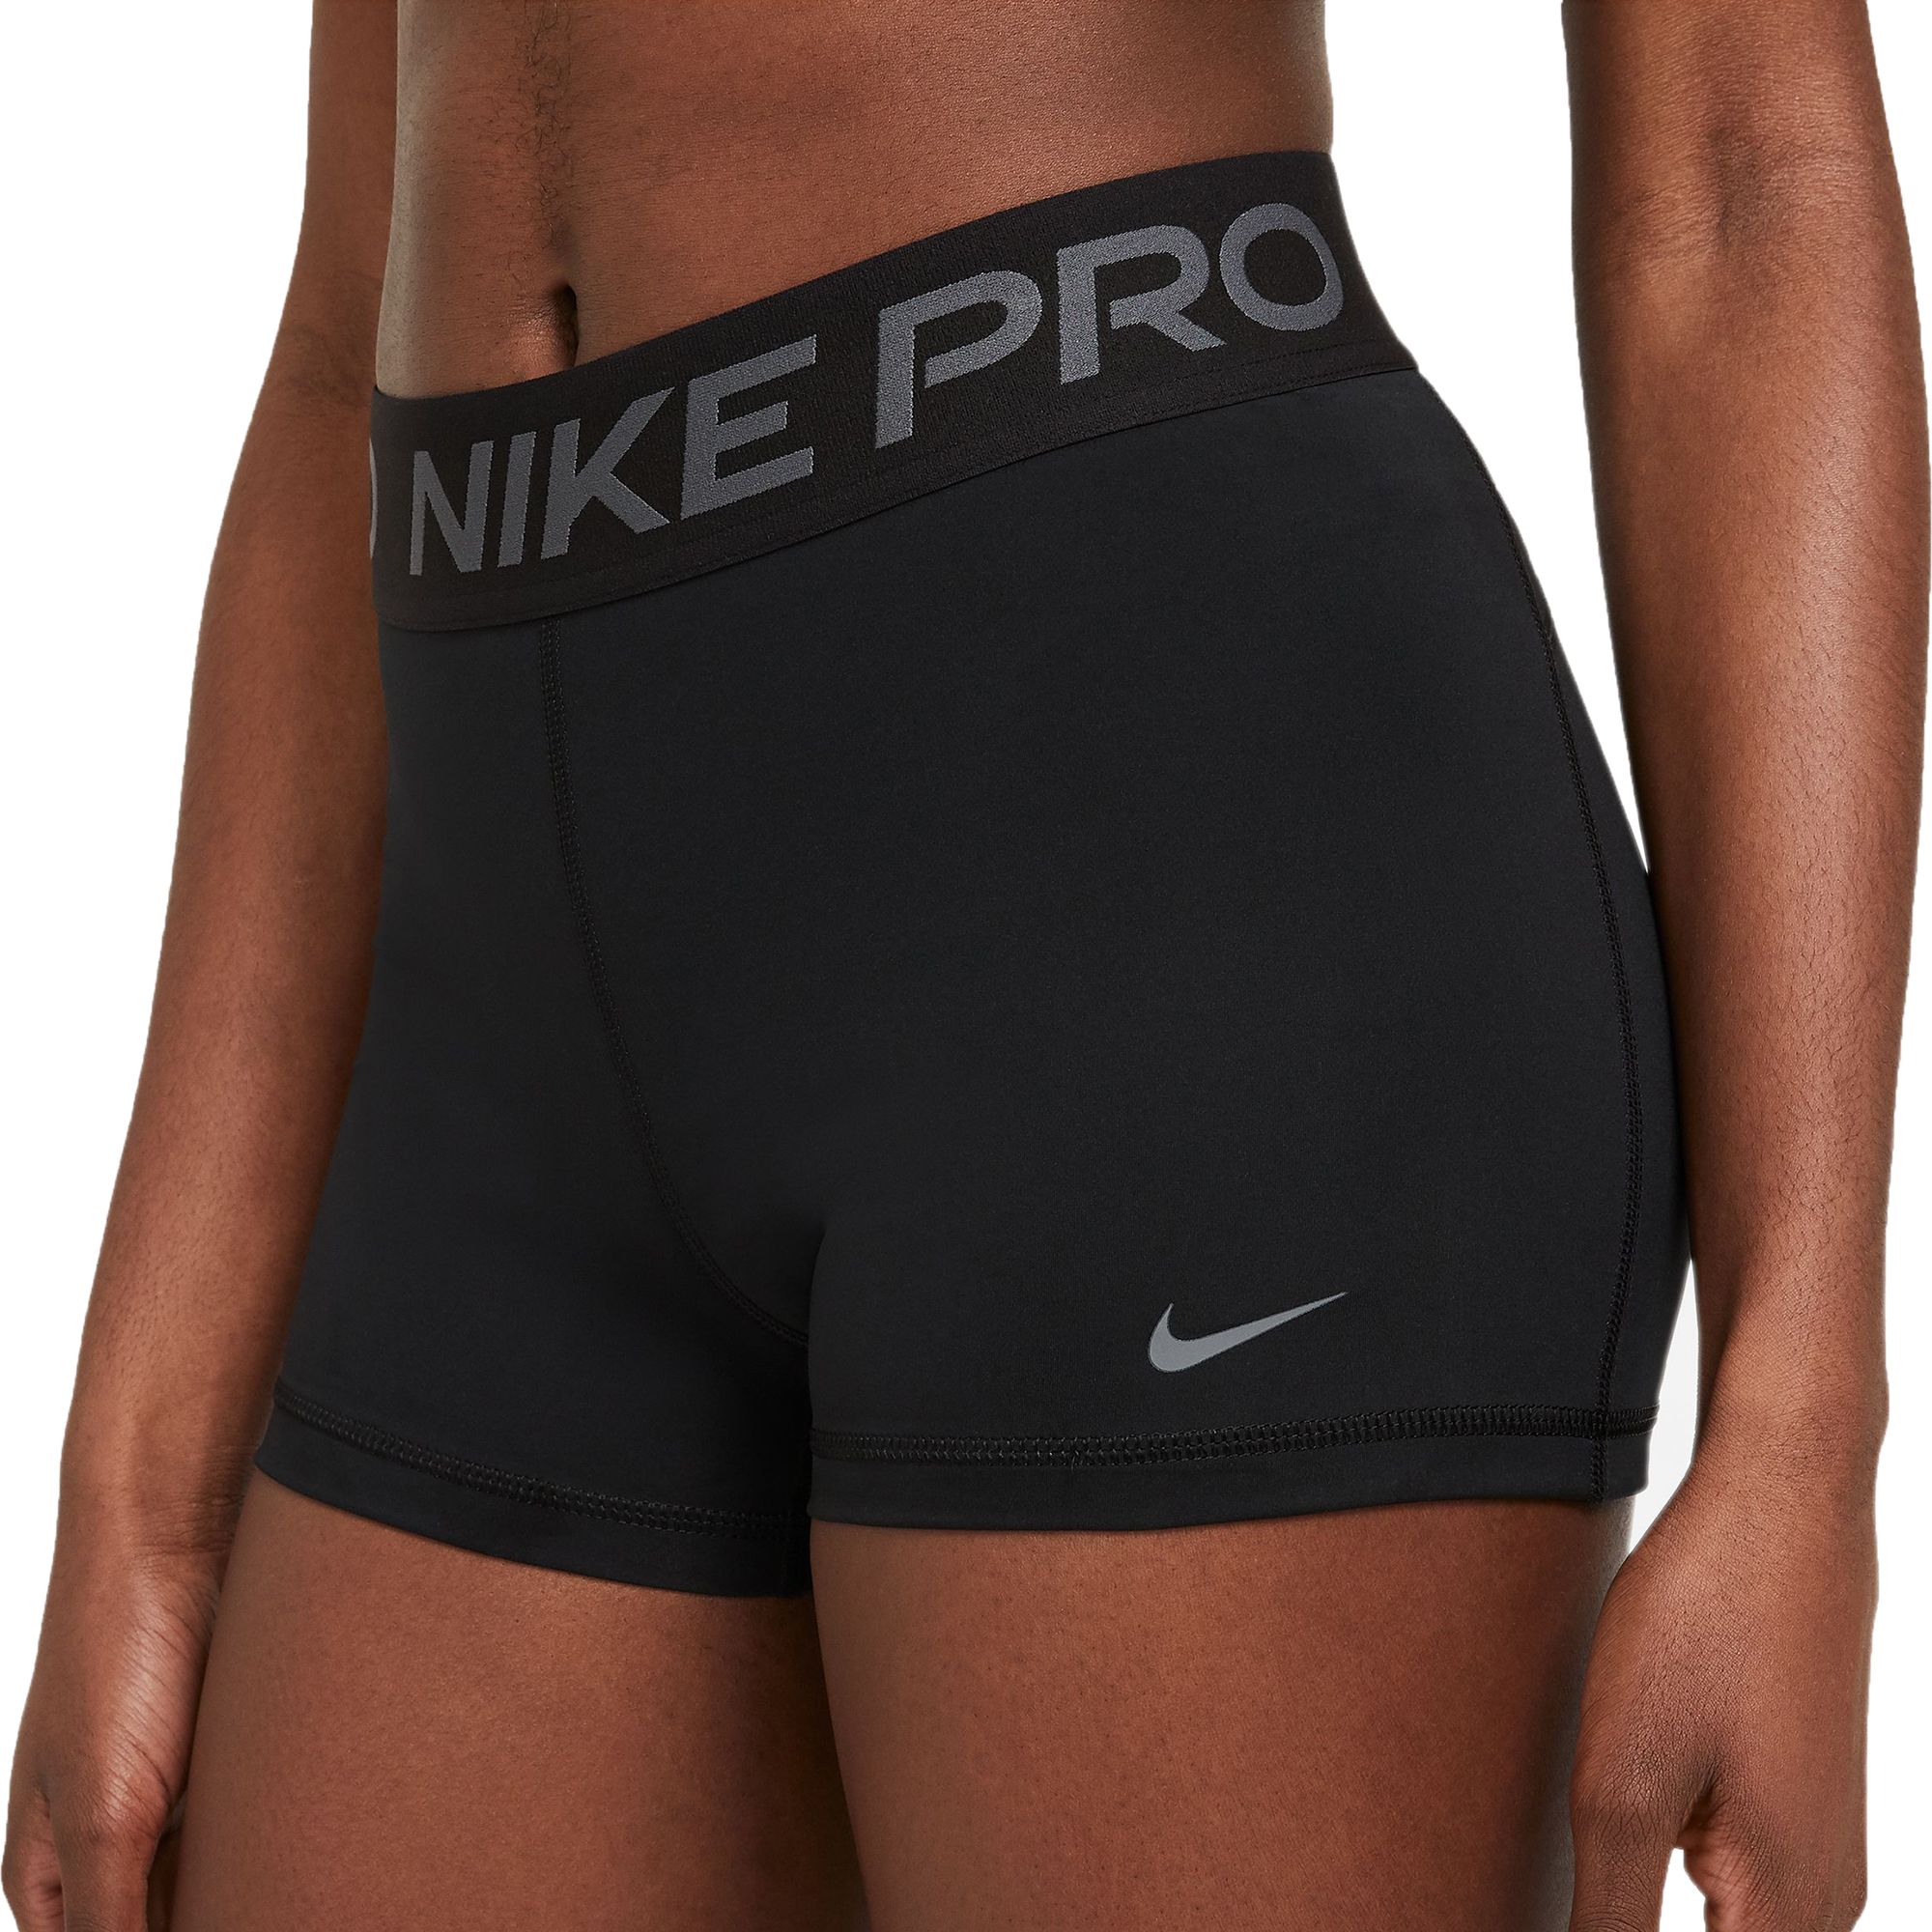 nike pro three inch shorts